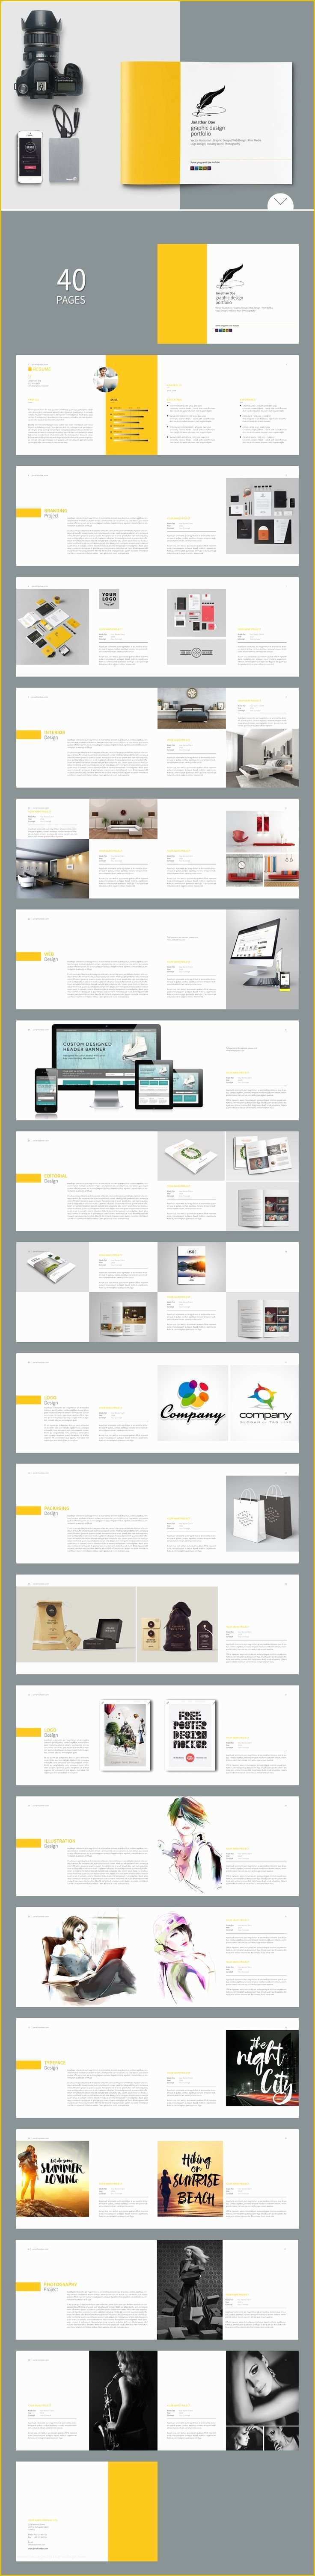 Interior Design Layout Templates Free Of Free Indesign Report Templates Graphic Design Print